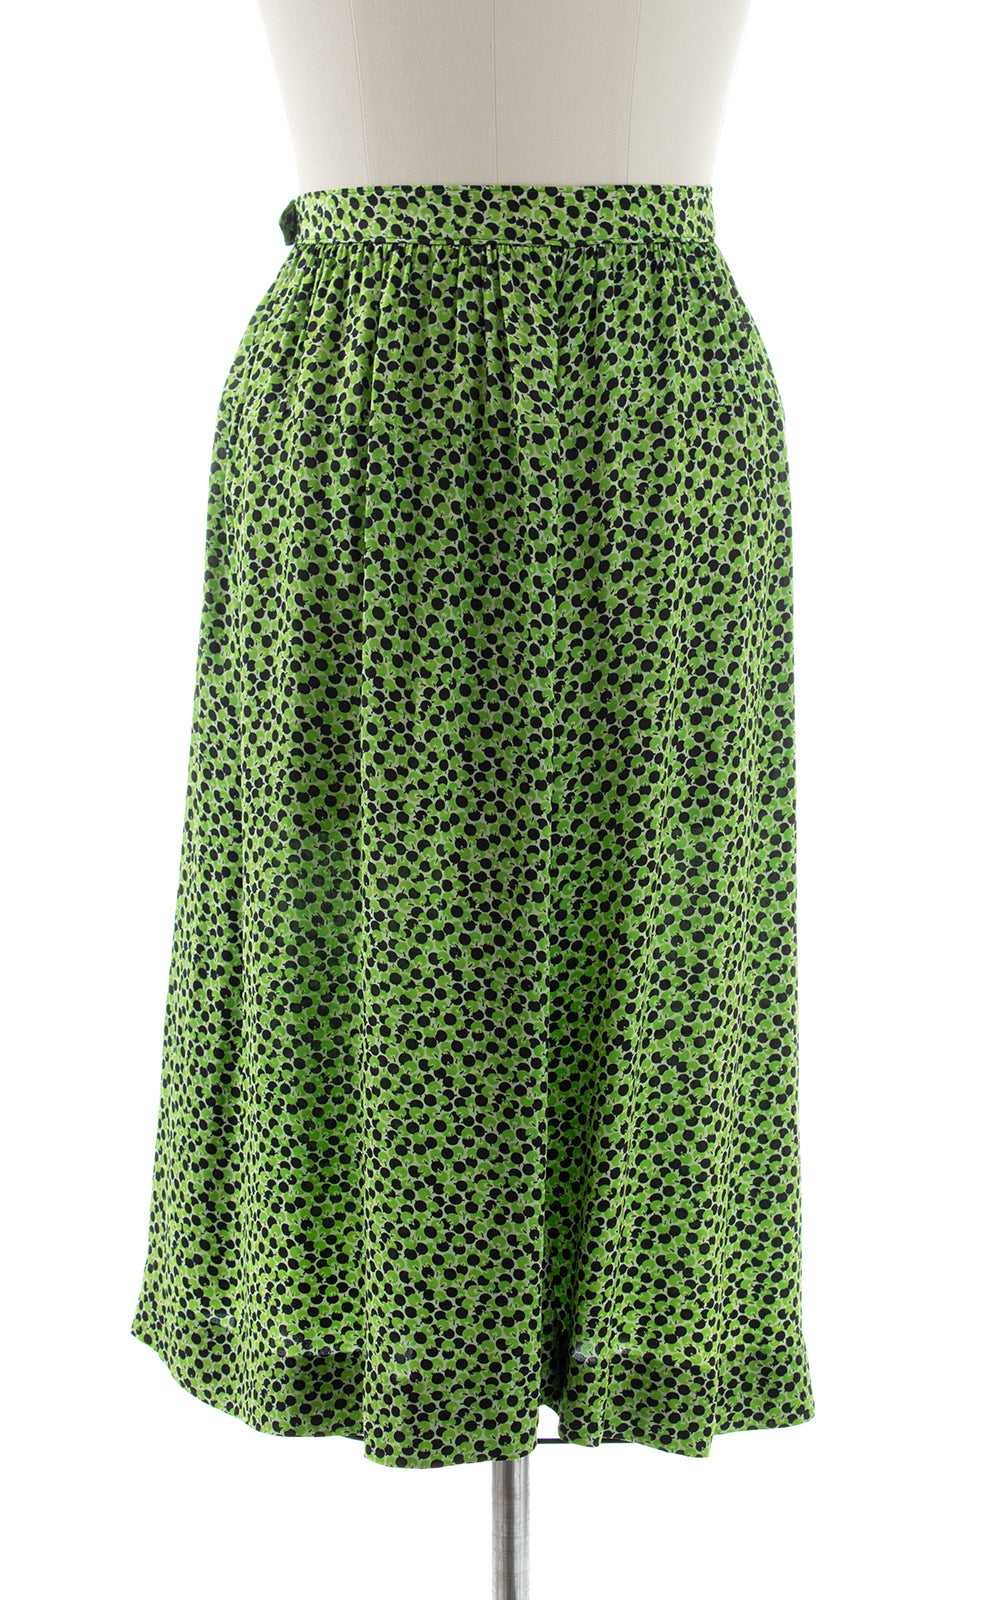 1940s Apples or Olives Novelty Print Rayon Skirt … - image 4